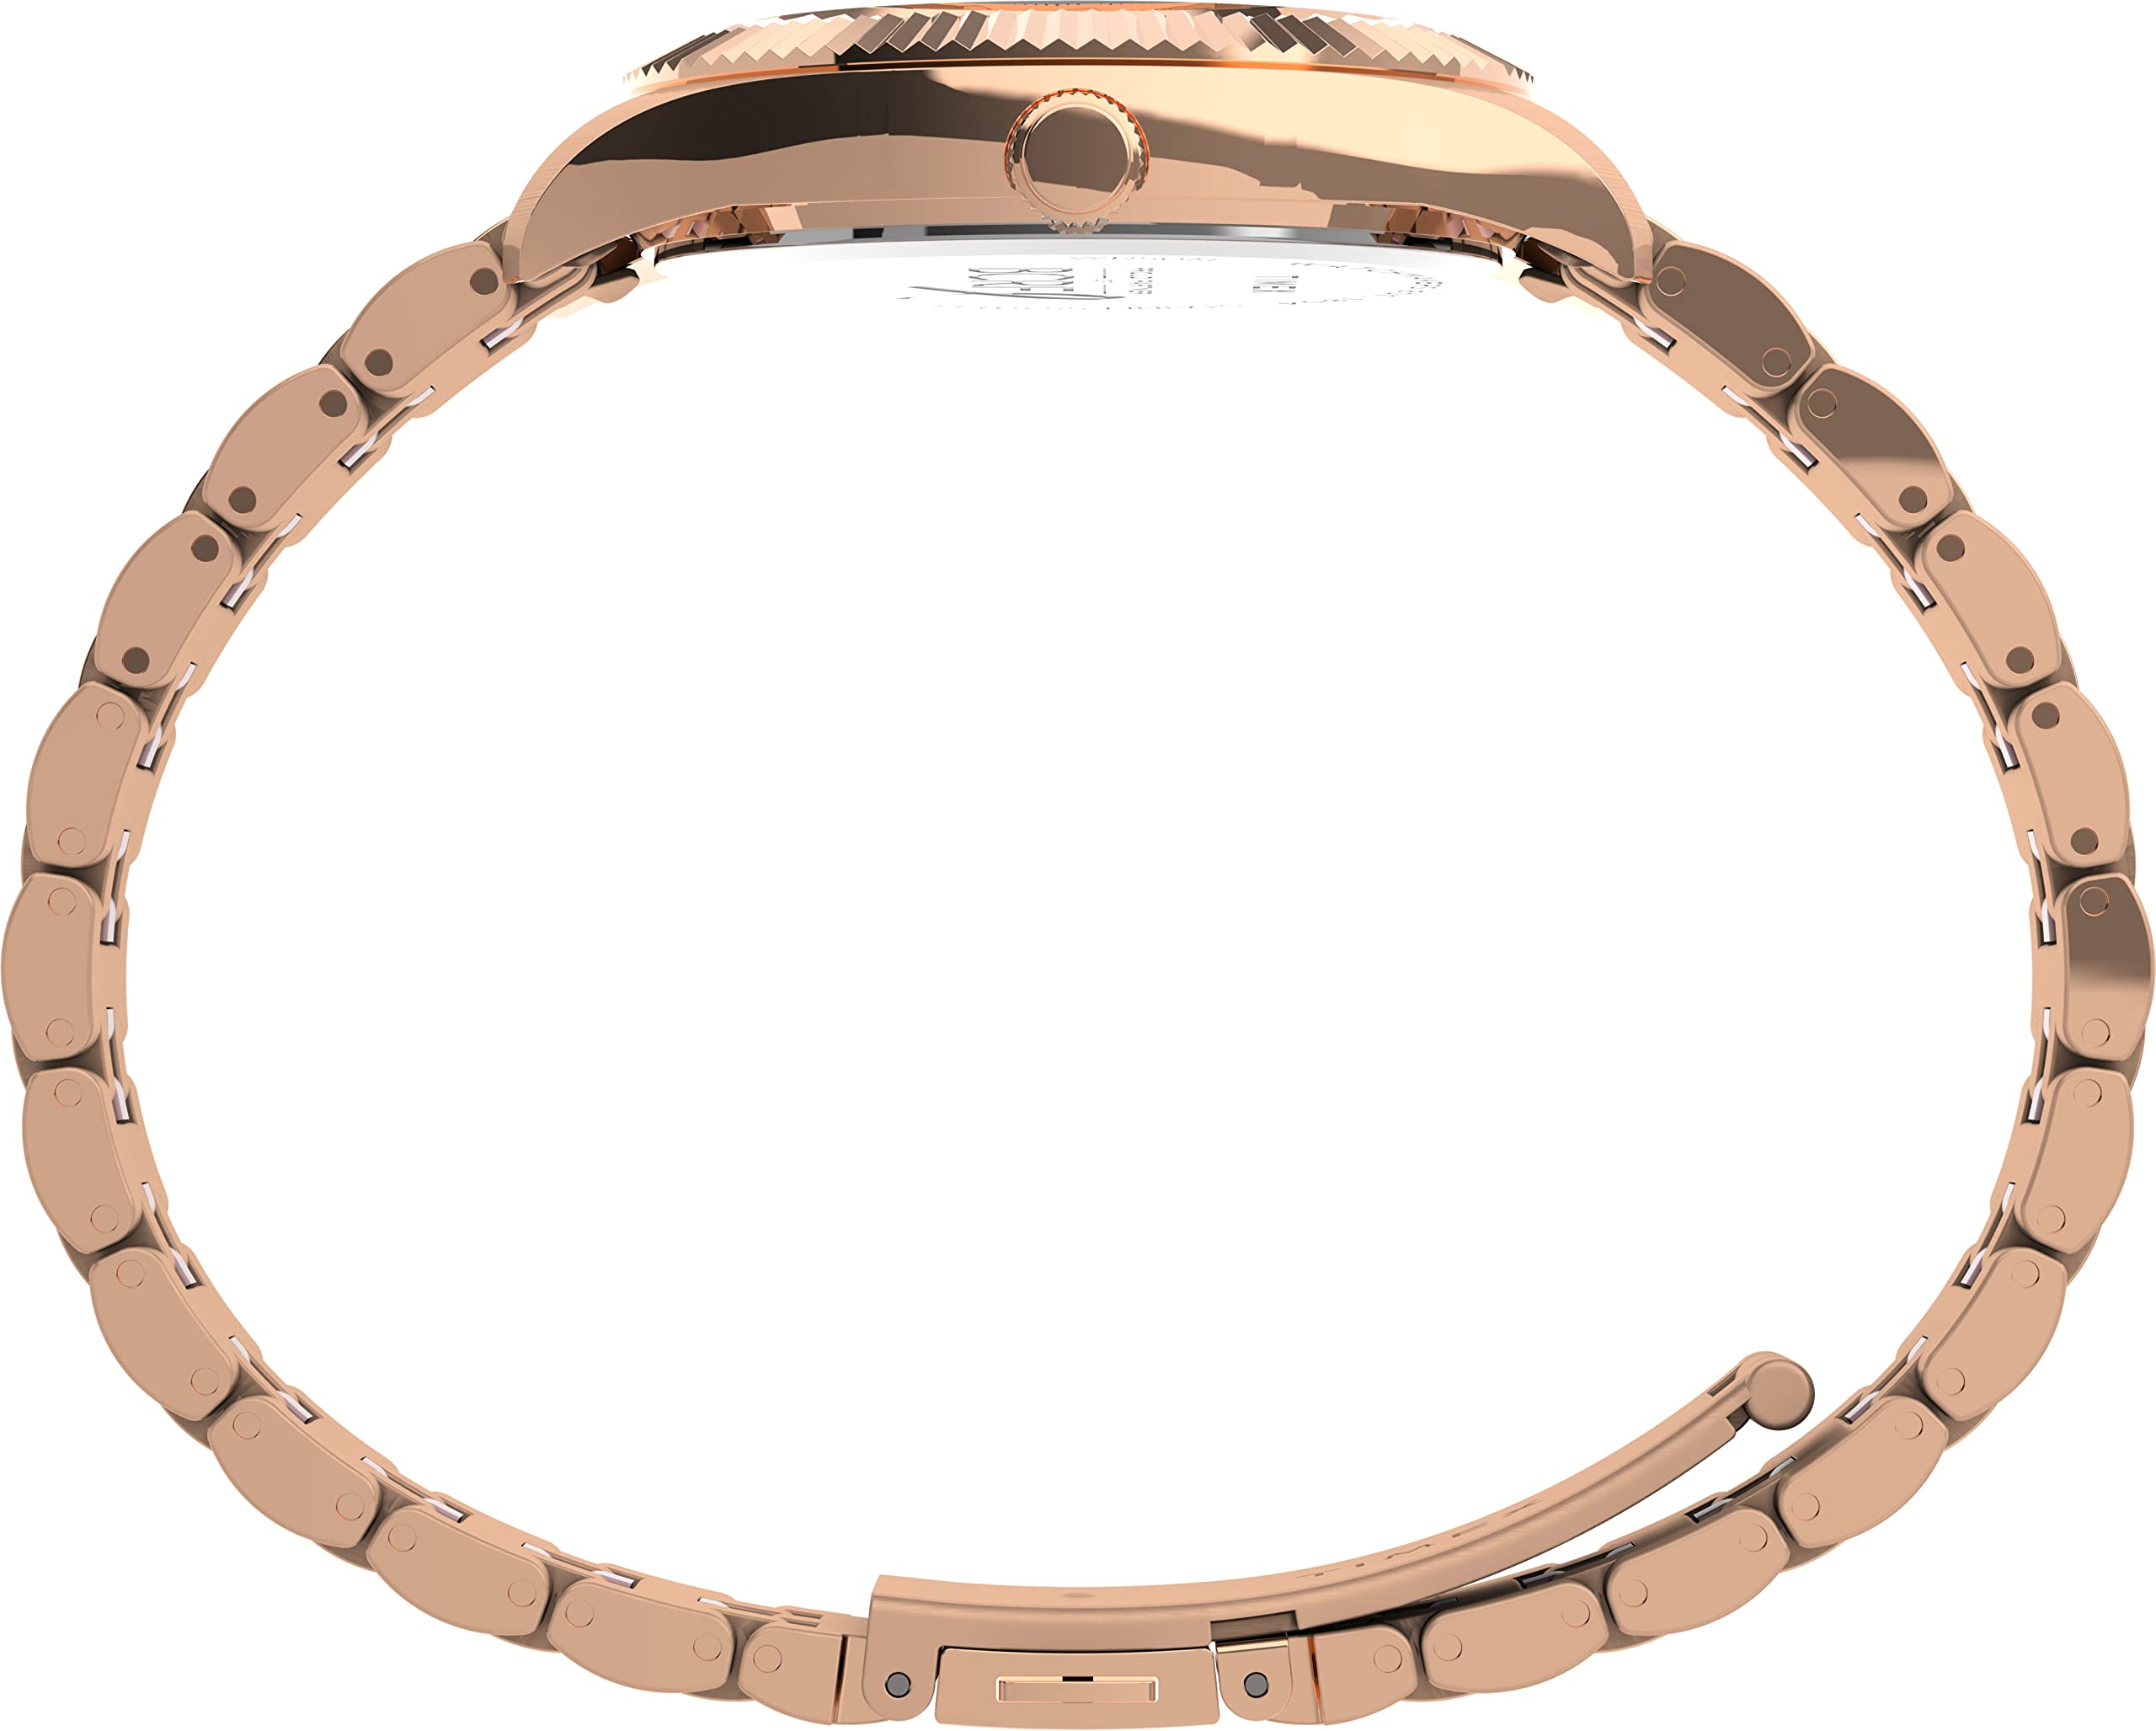 Timex Women's Waterbury Legacy x BCRF 36mm Watch - Rose Gold-Tone Bracelet Pink Dial Rose Gold-Tone Case